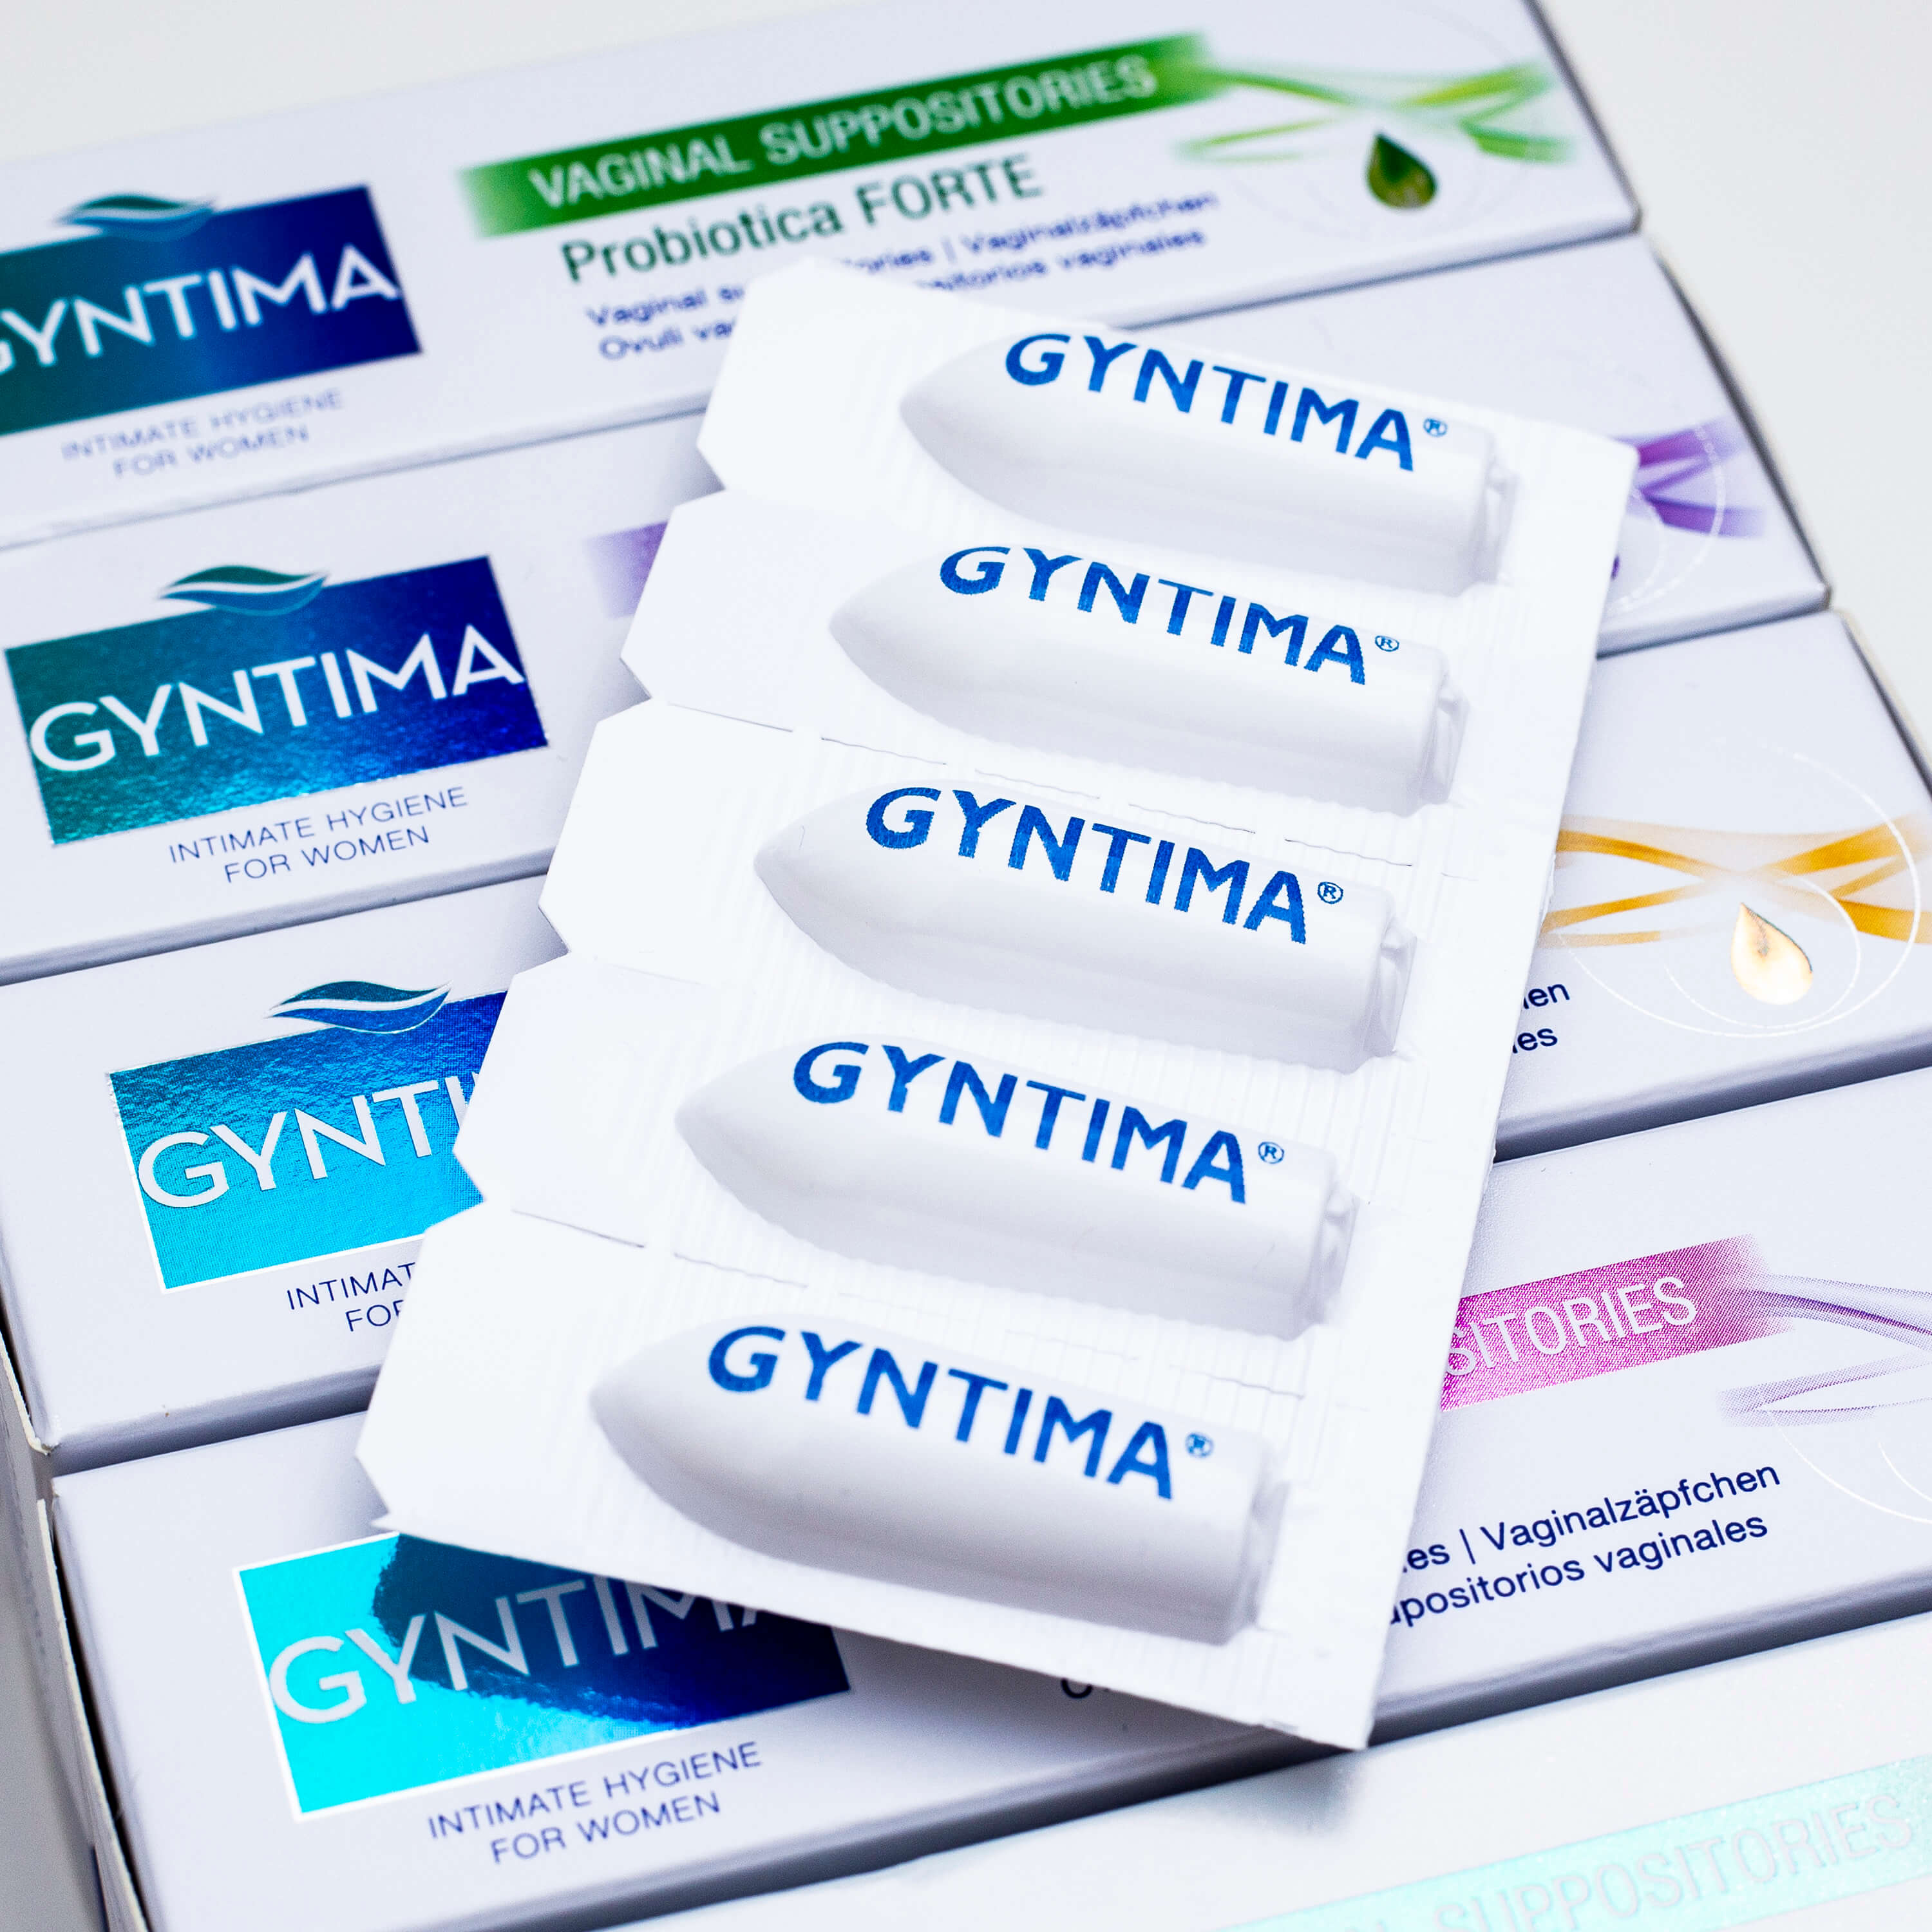 Gyntima Probiotica Forte